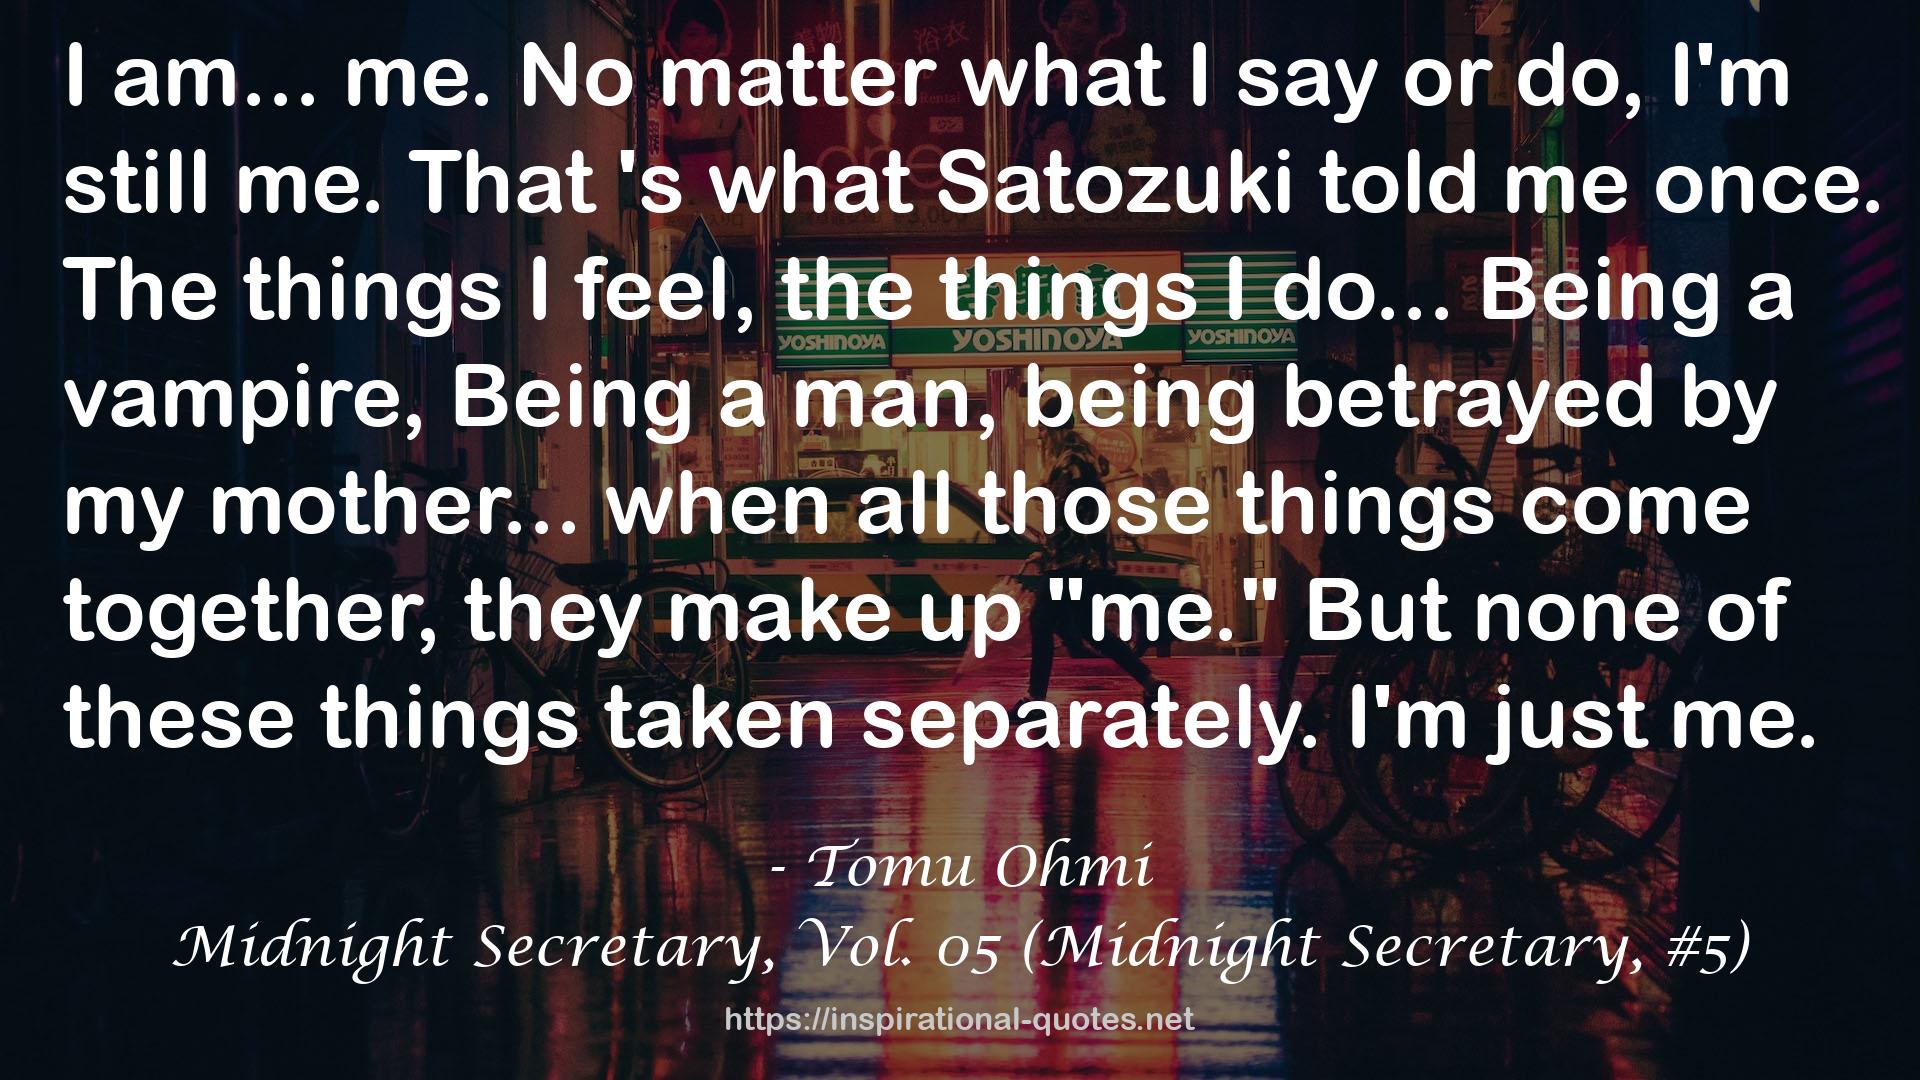 Midnight Secretary, Vol. 05 (Midnight Secretary, #5) QUOTES